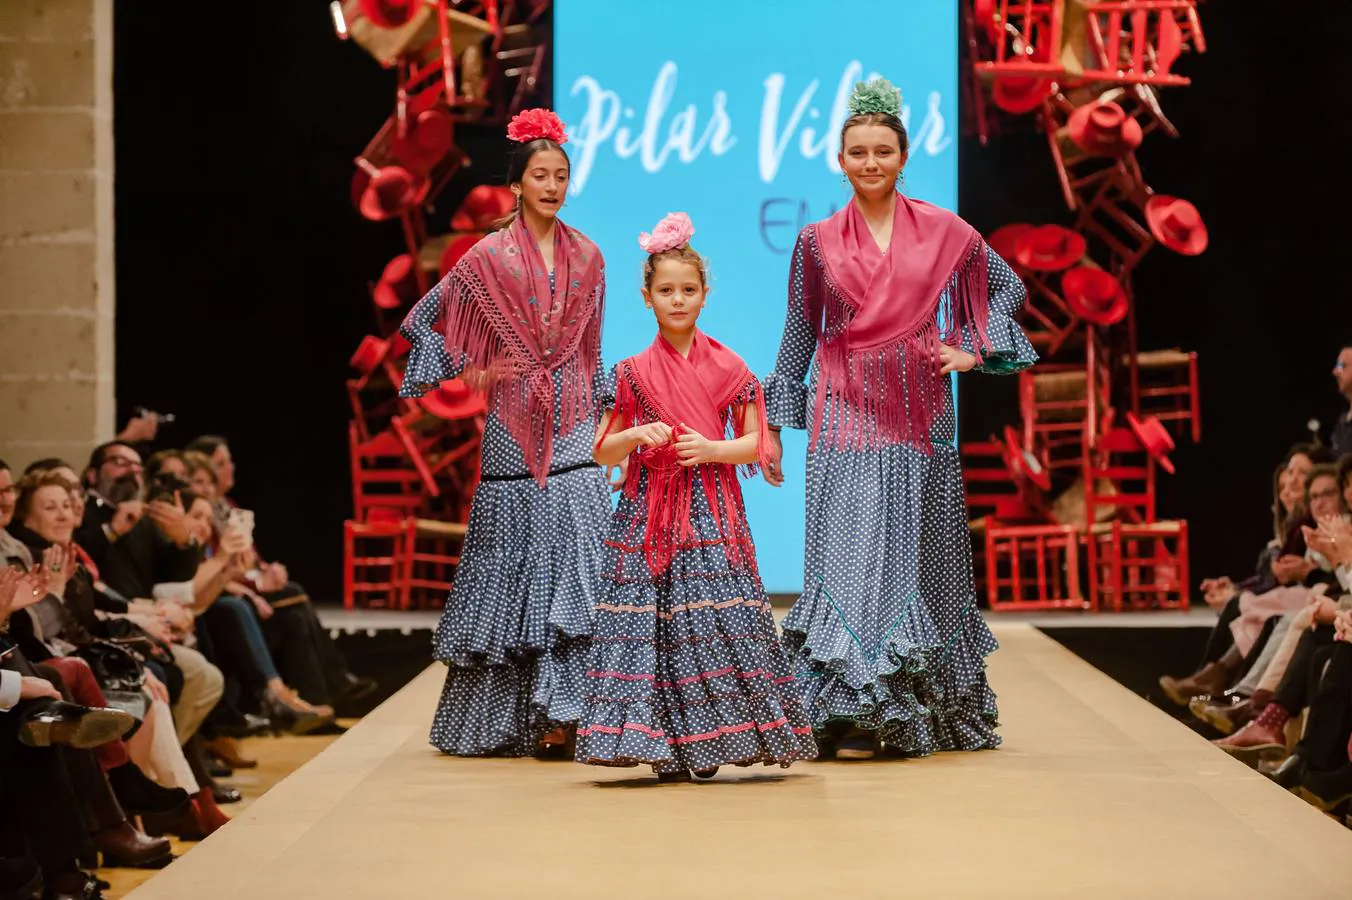 FOTOS: Pilar Villar en la Pasarela Flamenca Jerez Tío Pepe 2019